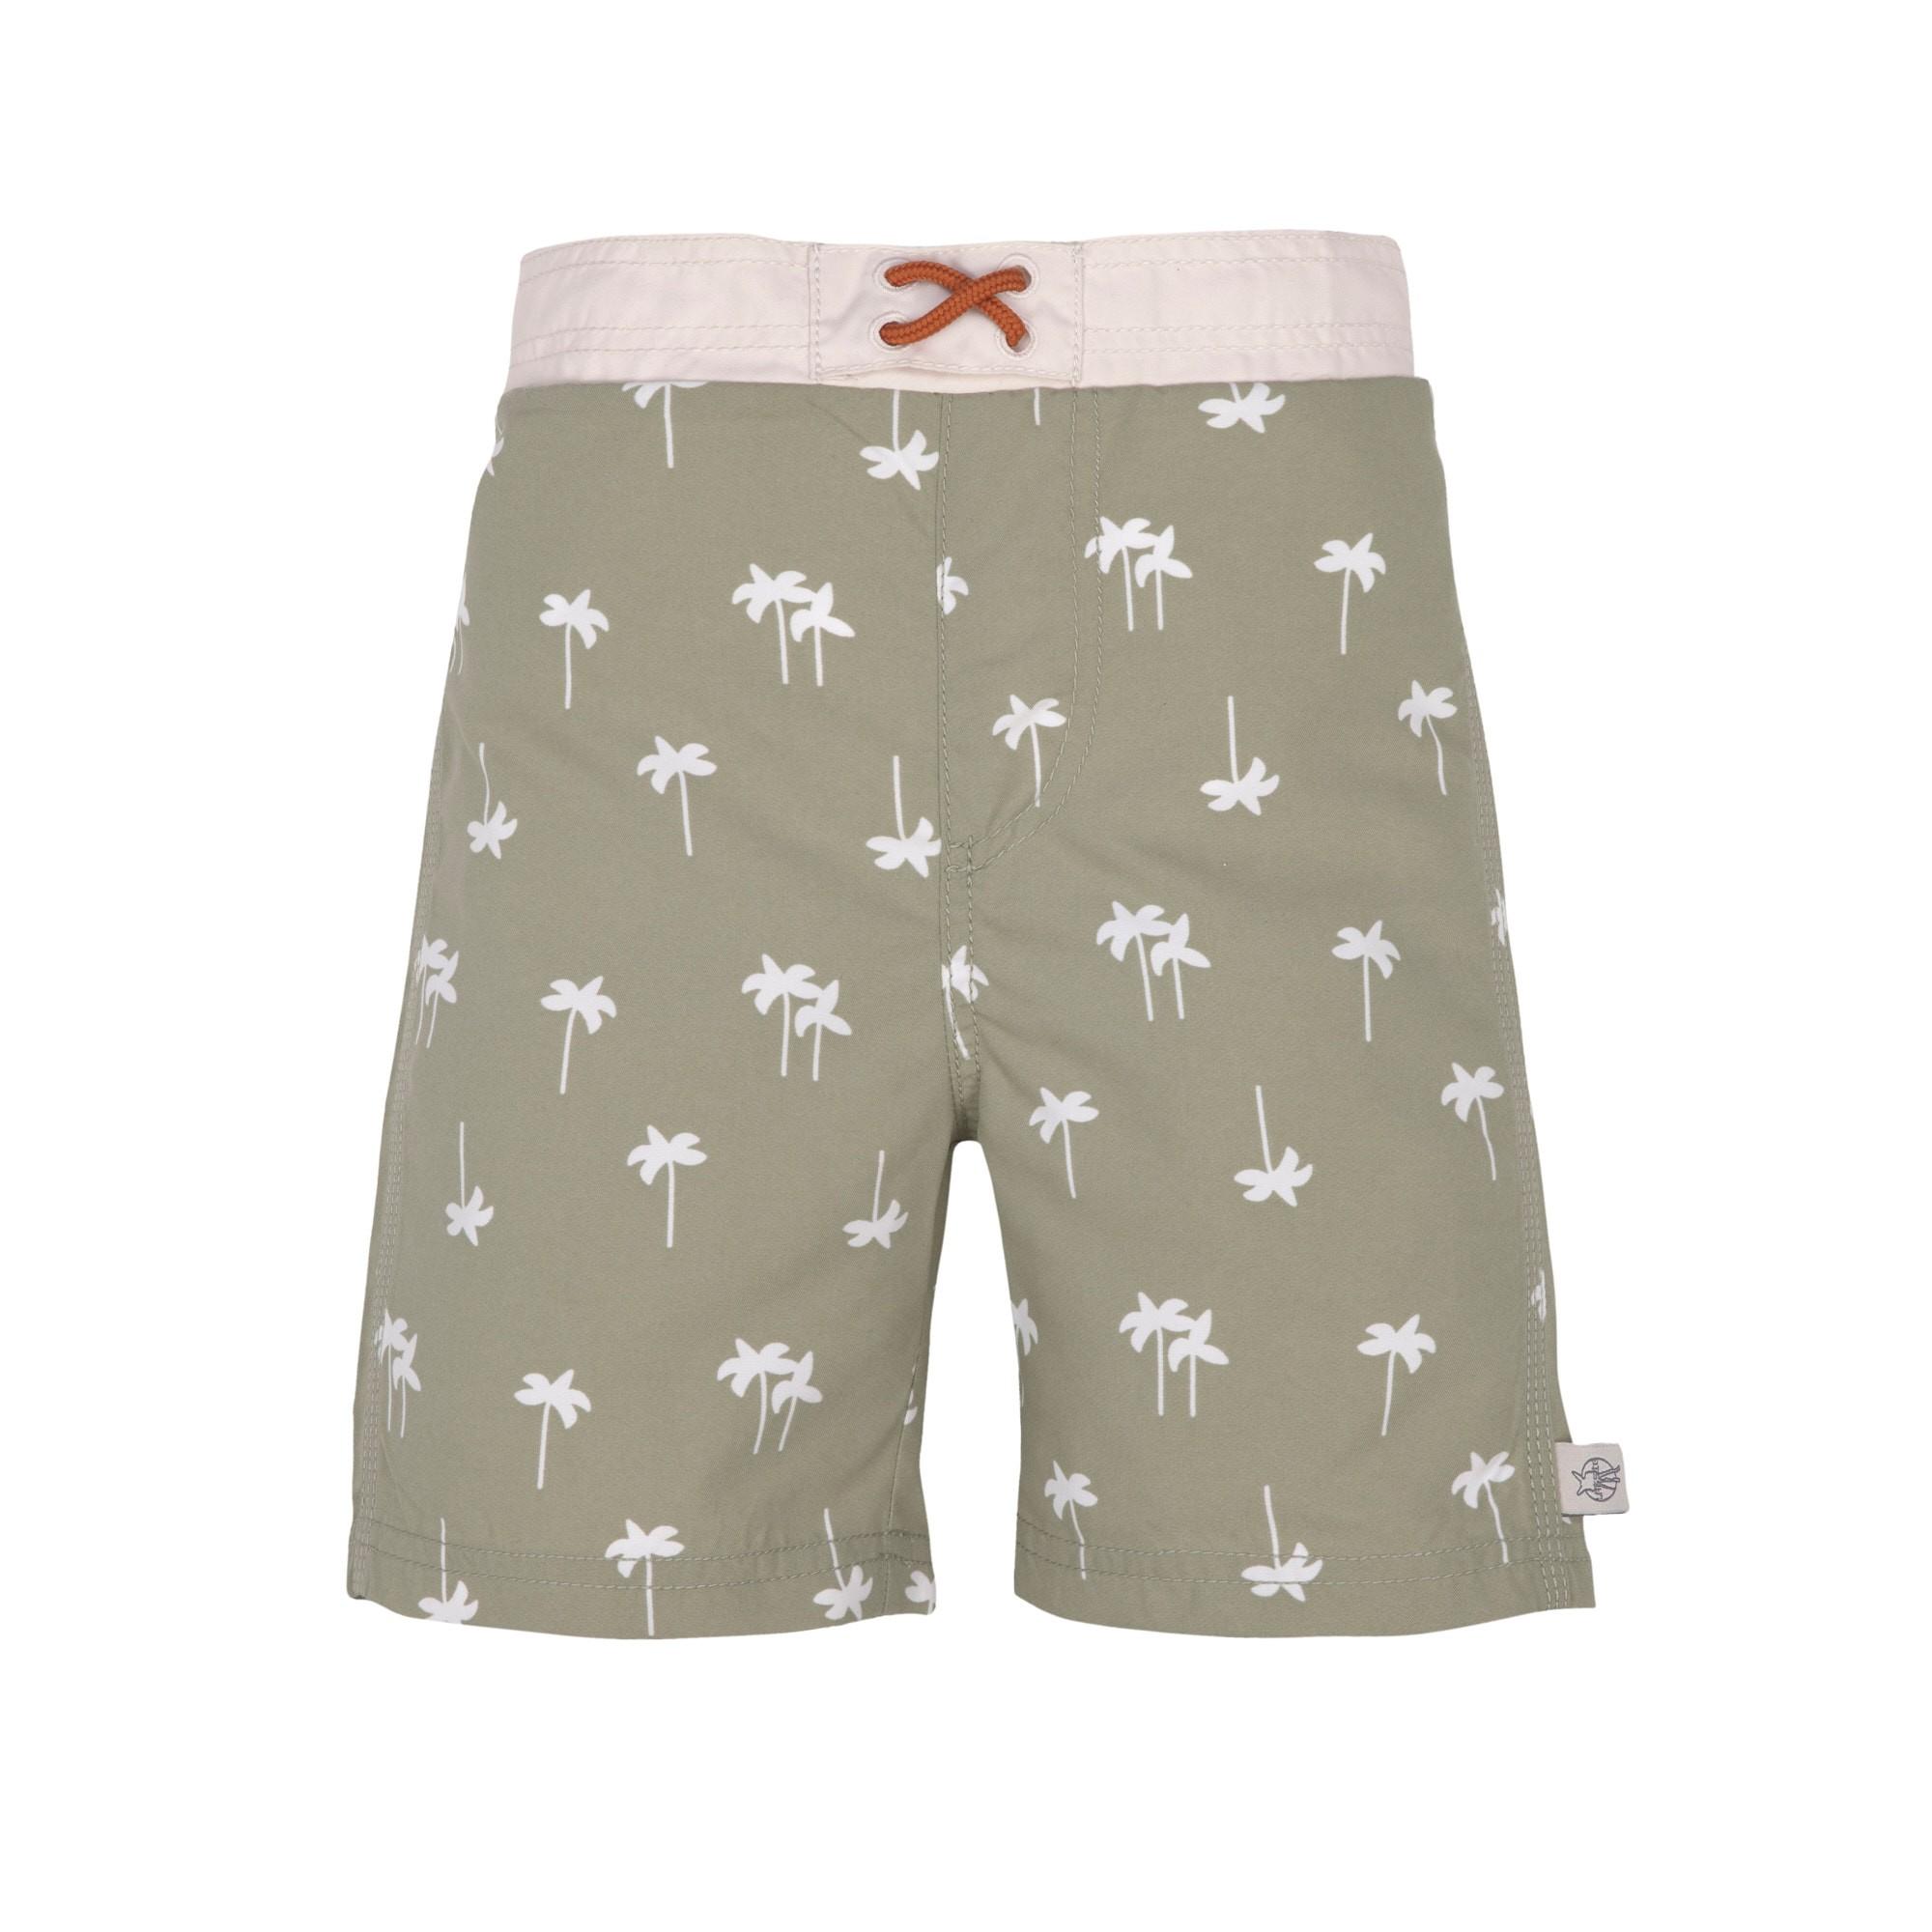 Splash & Fun - Board shorts palms olive